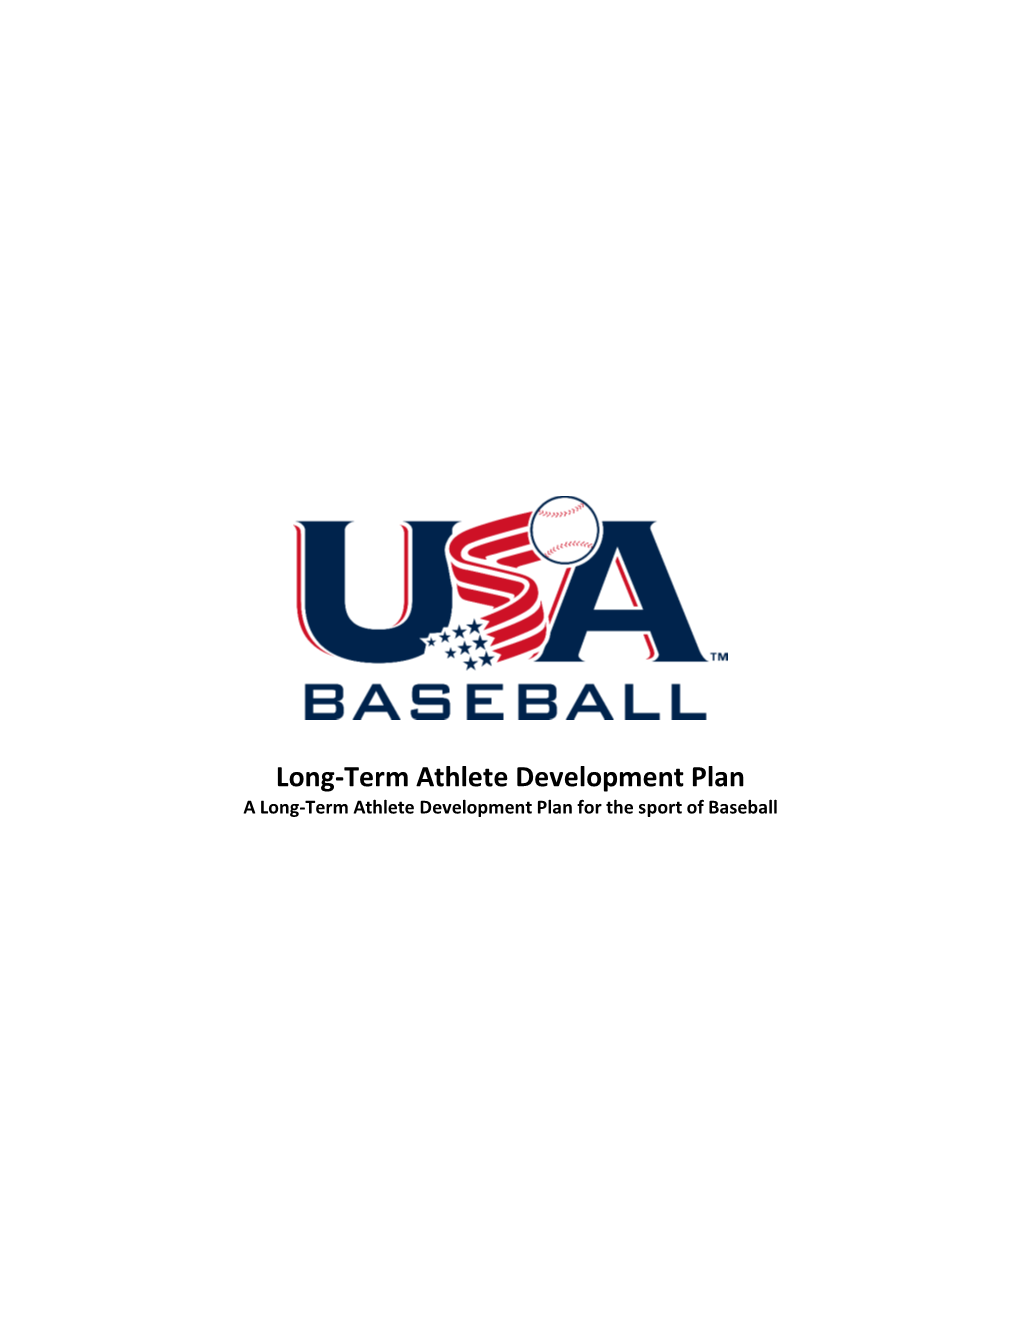 USA Baseball's Long-Term Athlete Development